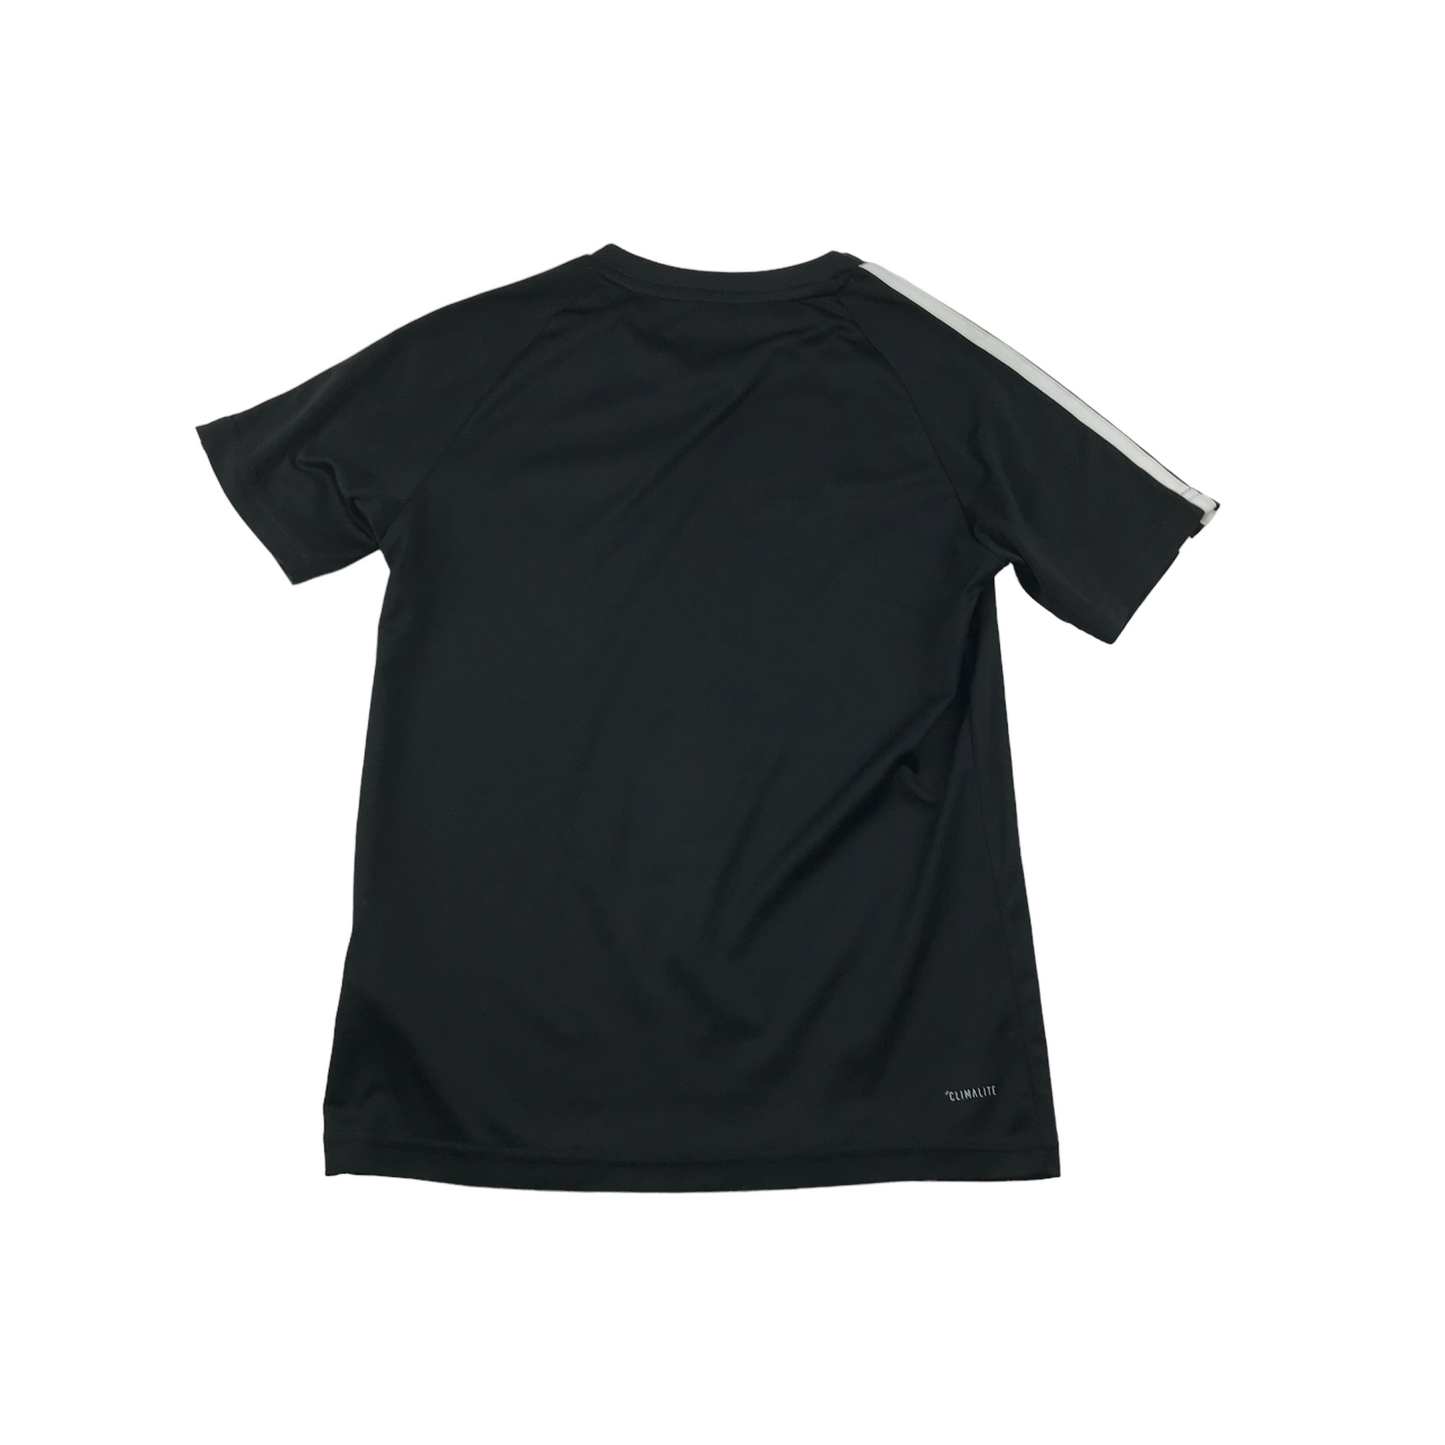 Adidas Black Classic 3 Stripes Sport T-shirt Age 9